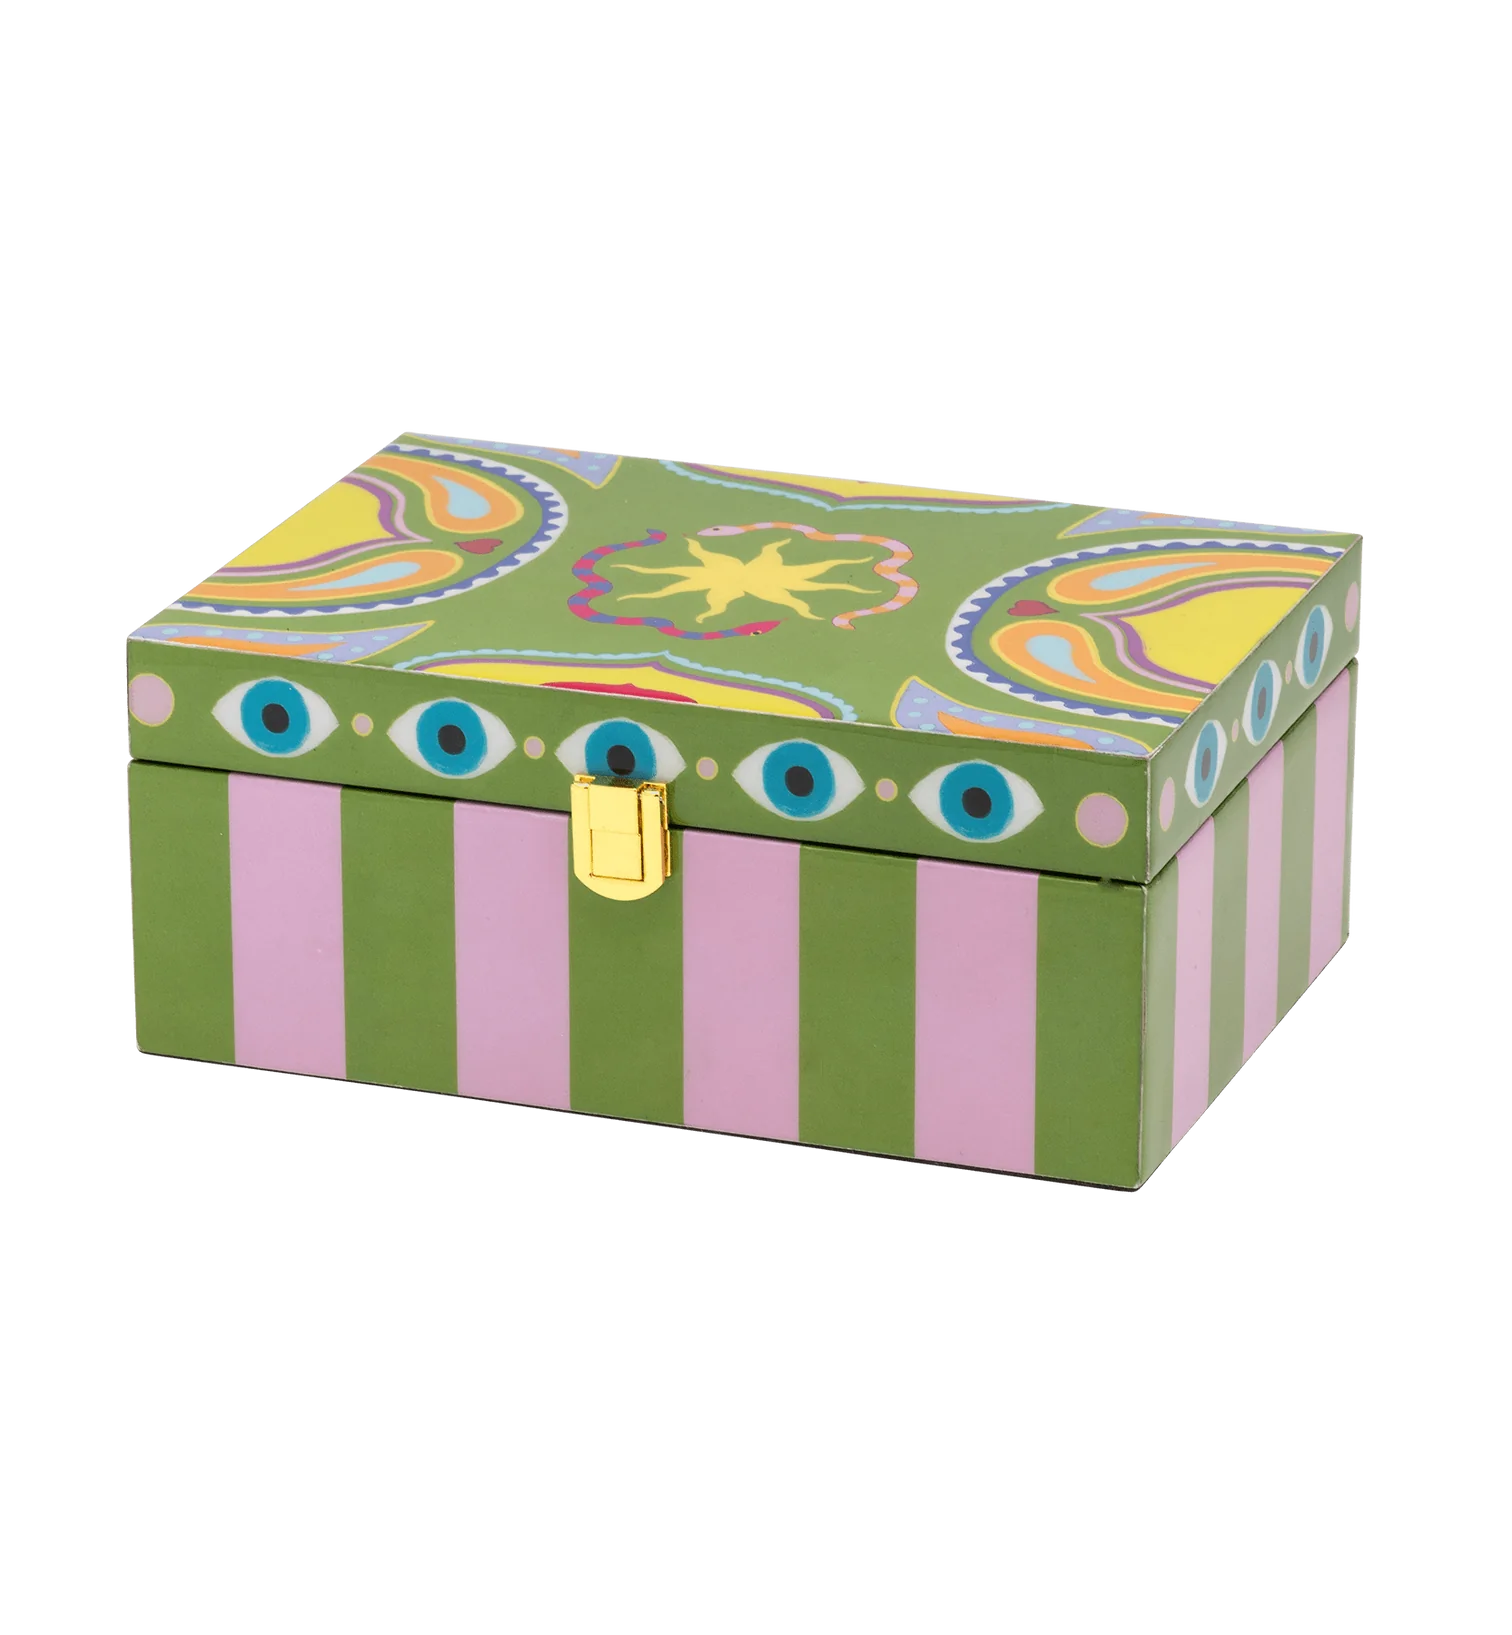 Lucid Dreams Jewellery Box